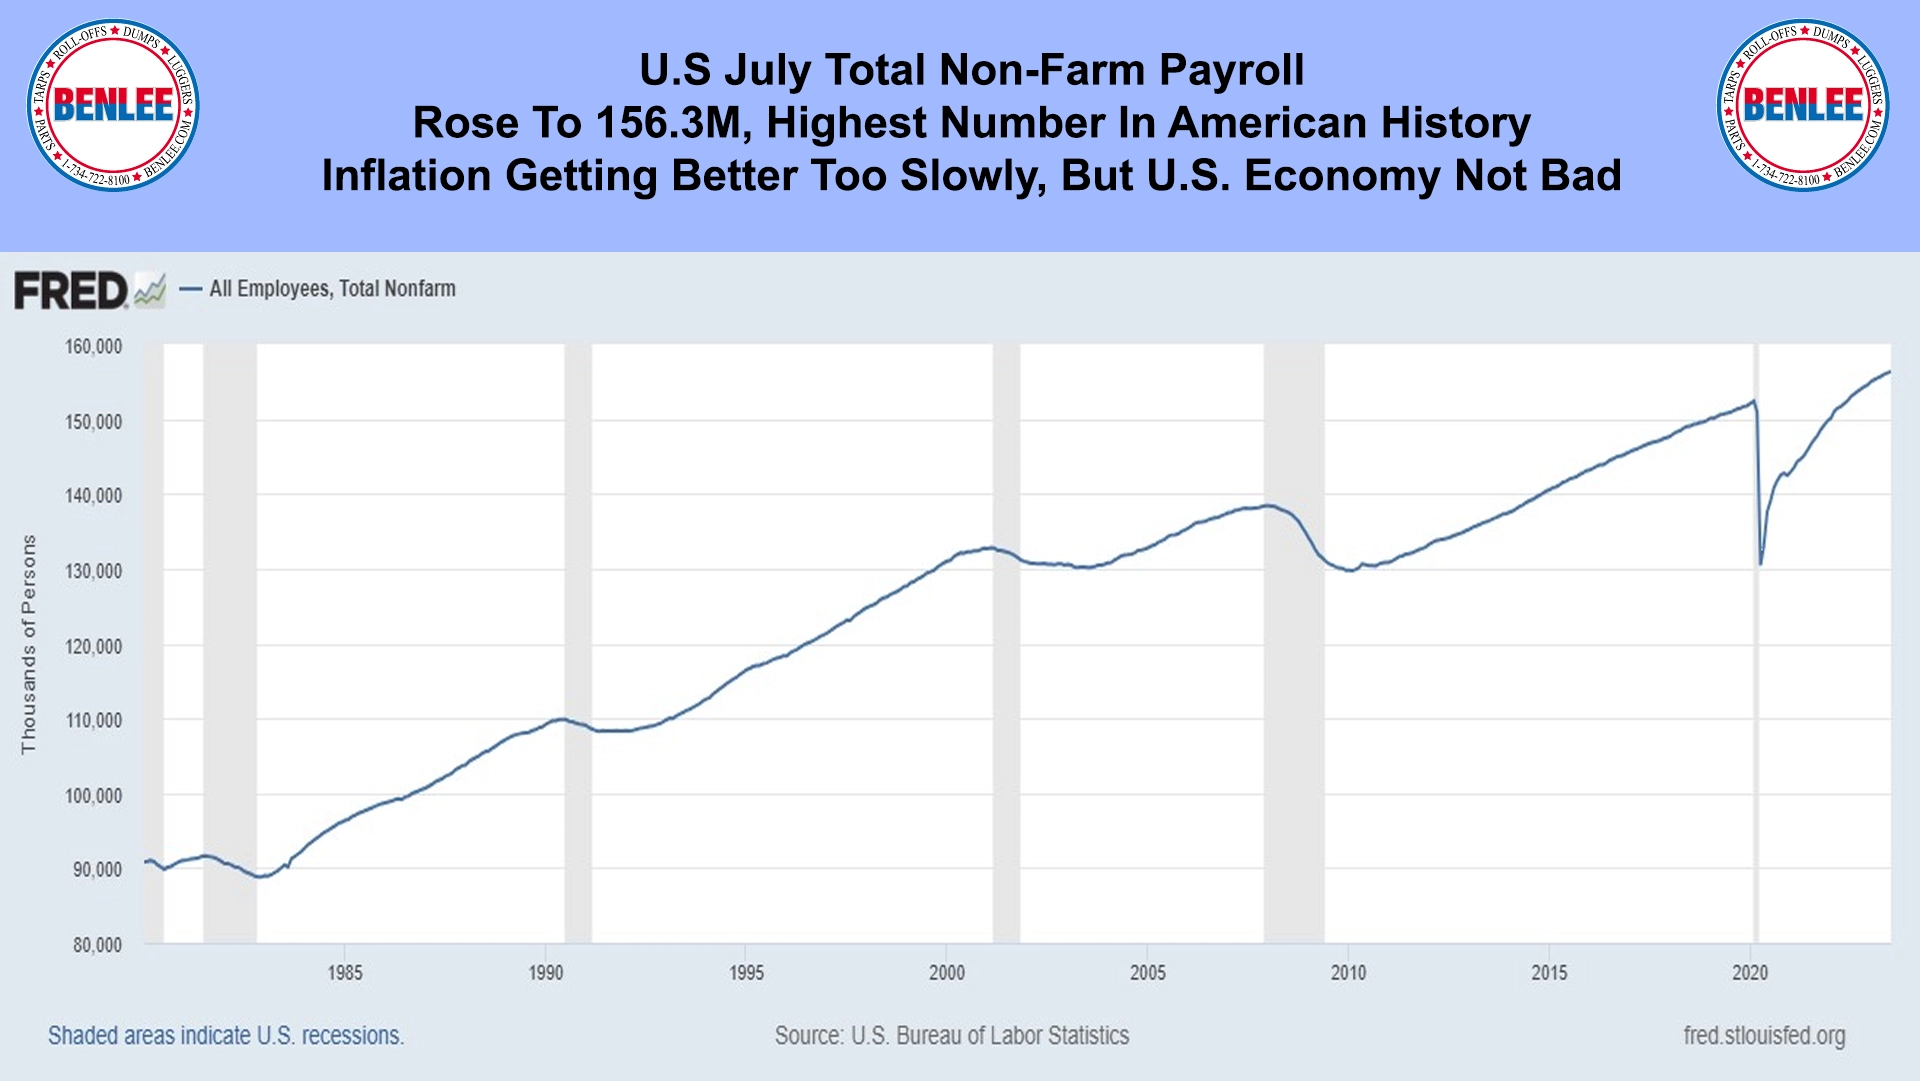 U.S July Total Non-Farm Payroll